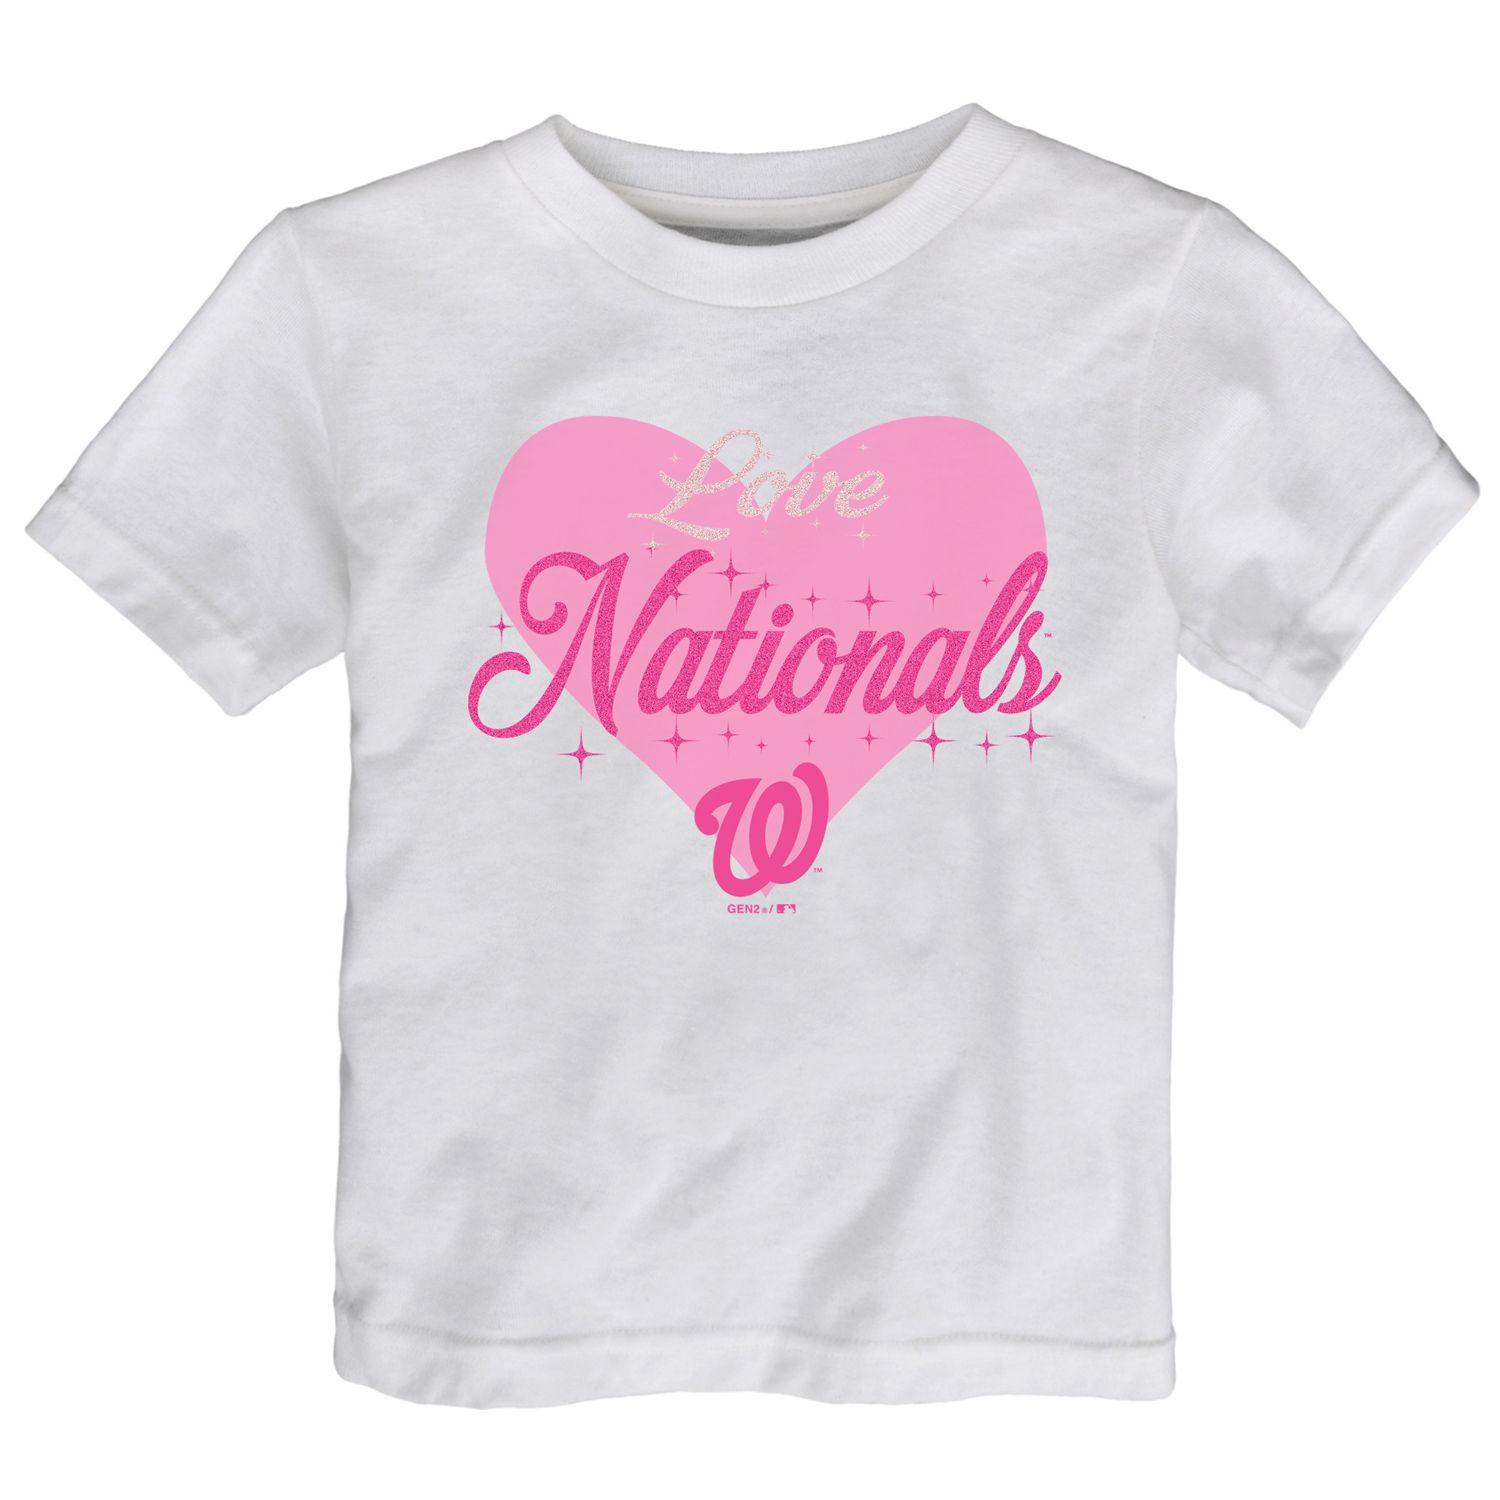 washington nationals toddler t shirt